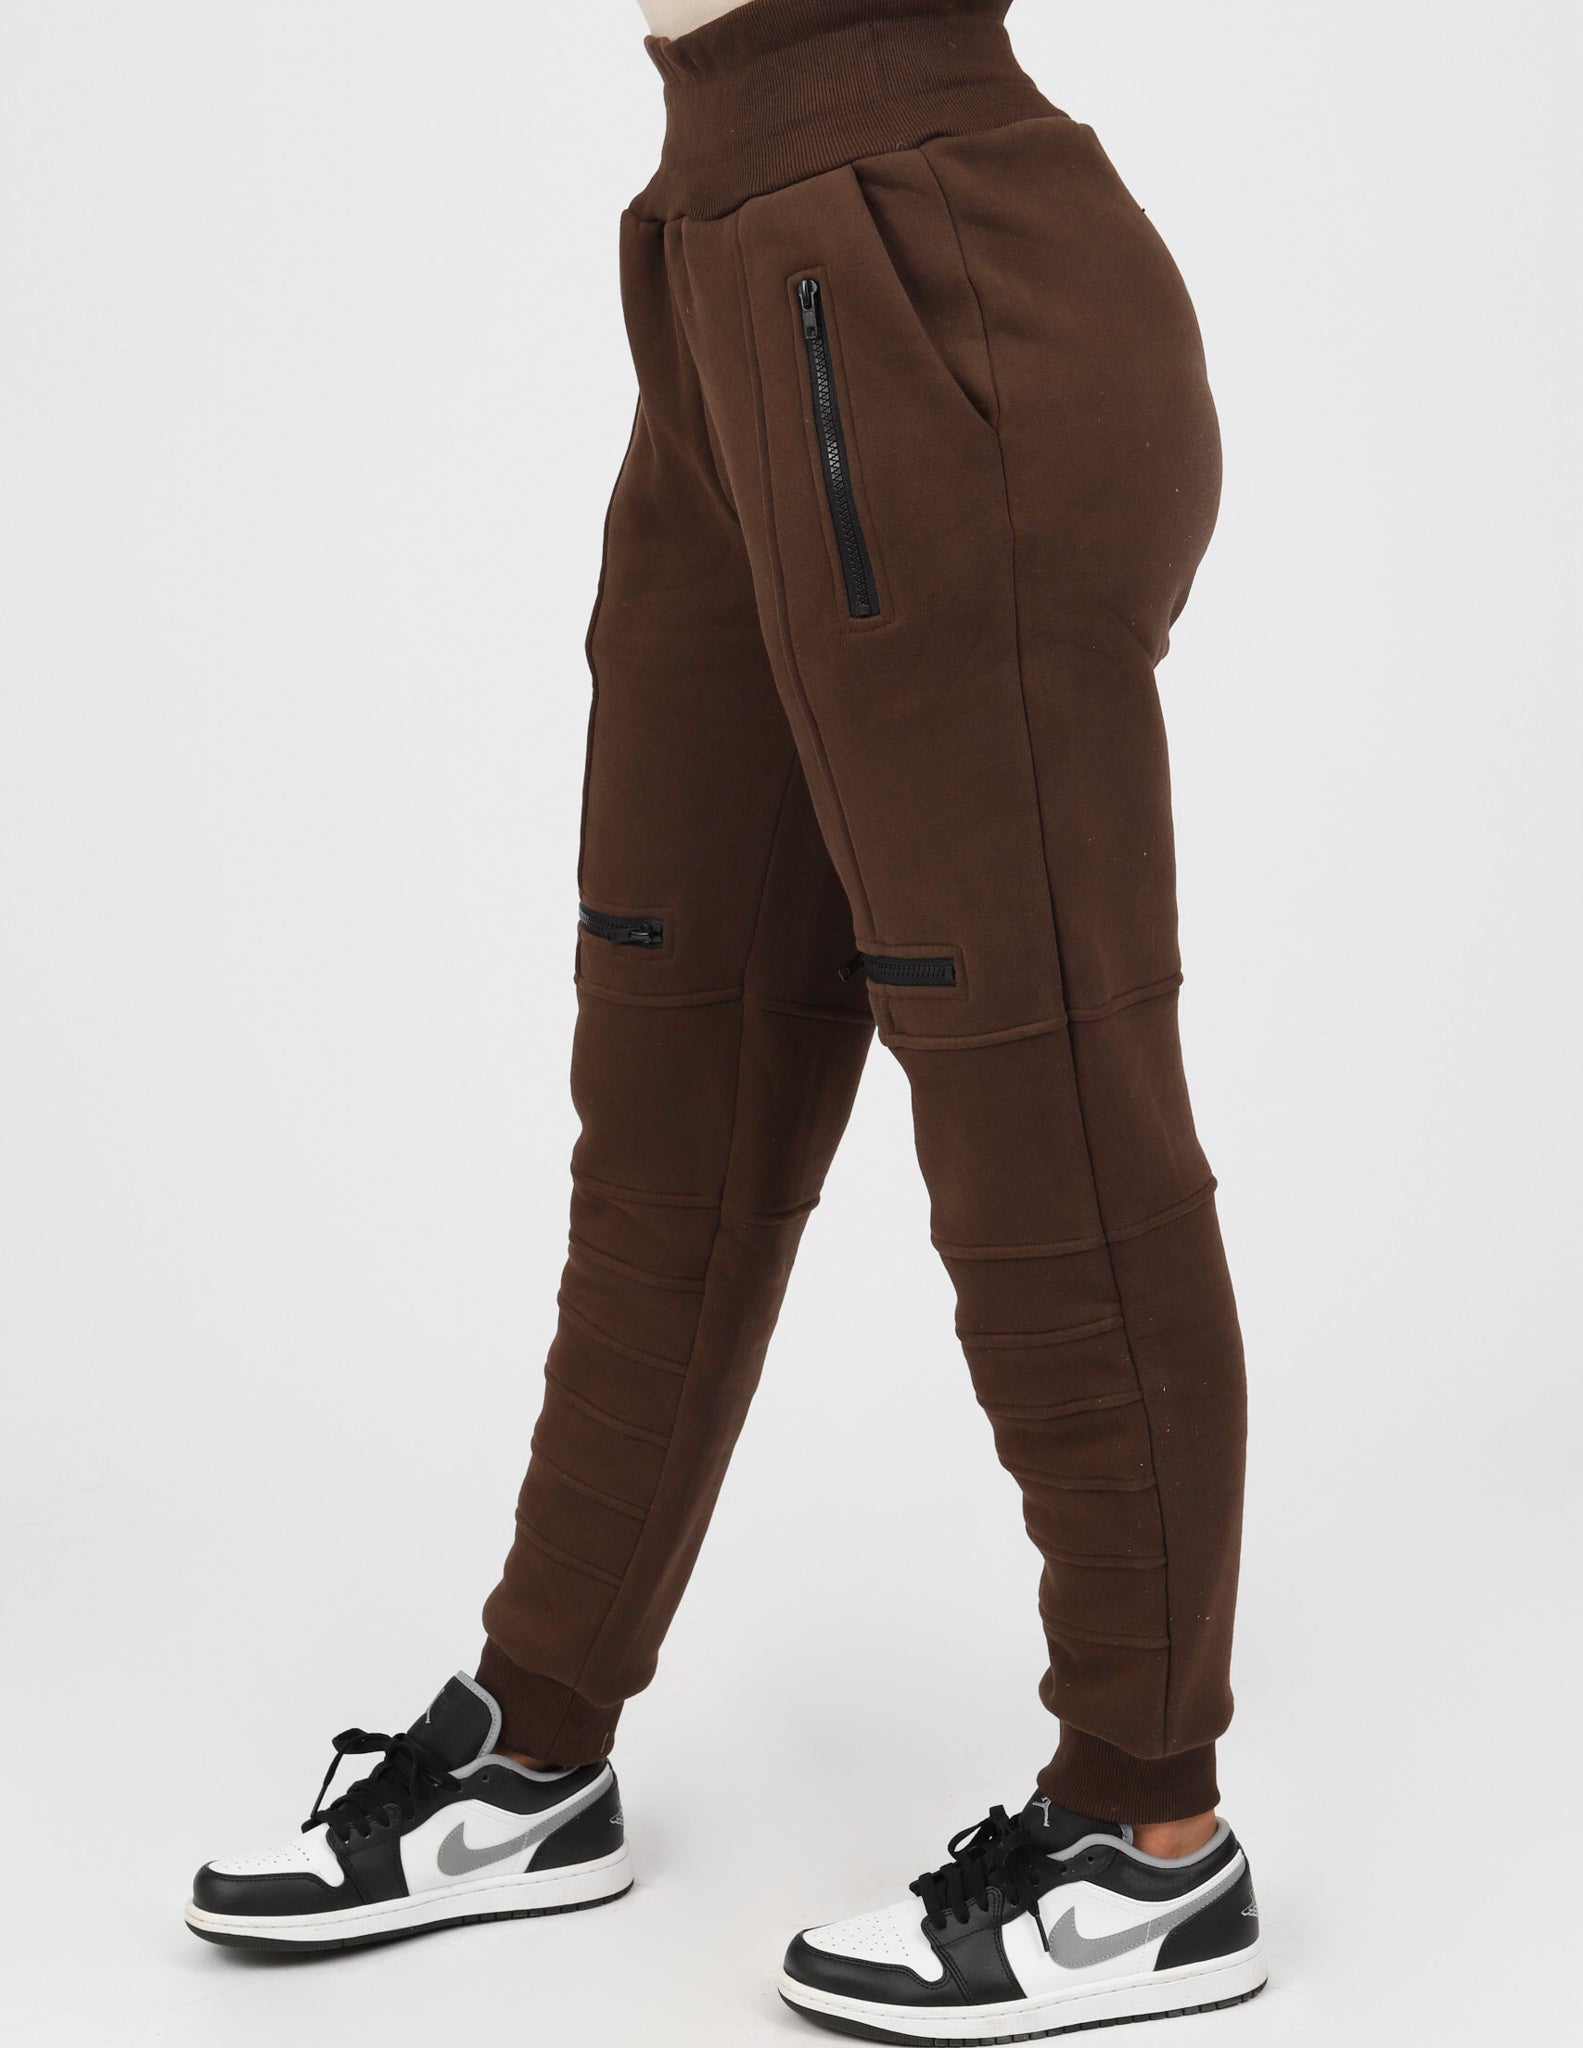 M7767Chocolate-sportwear-pant